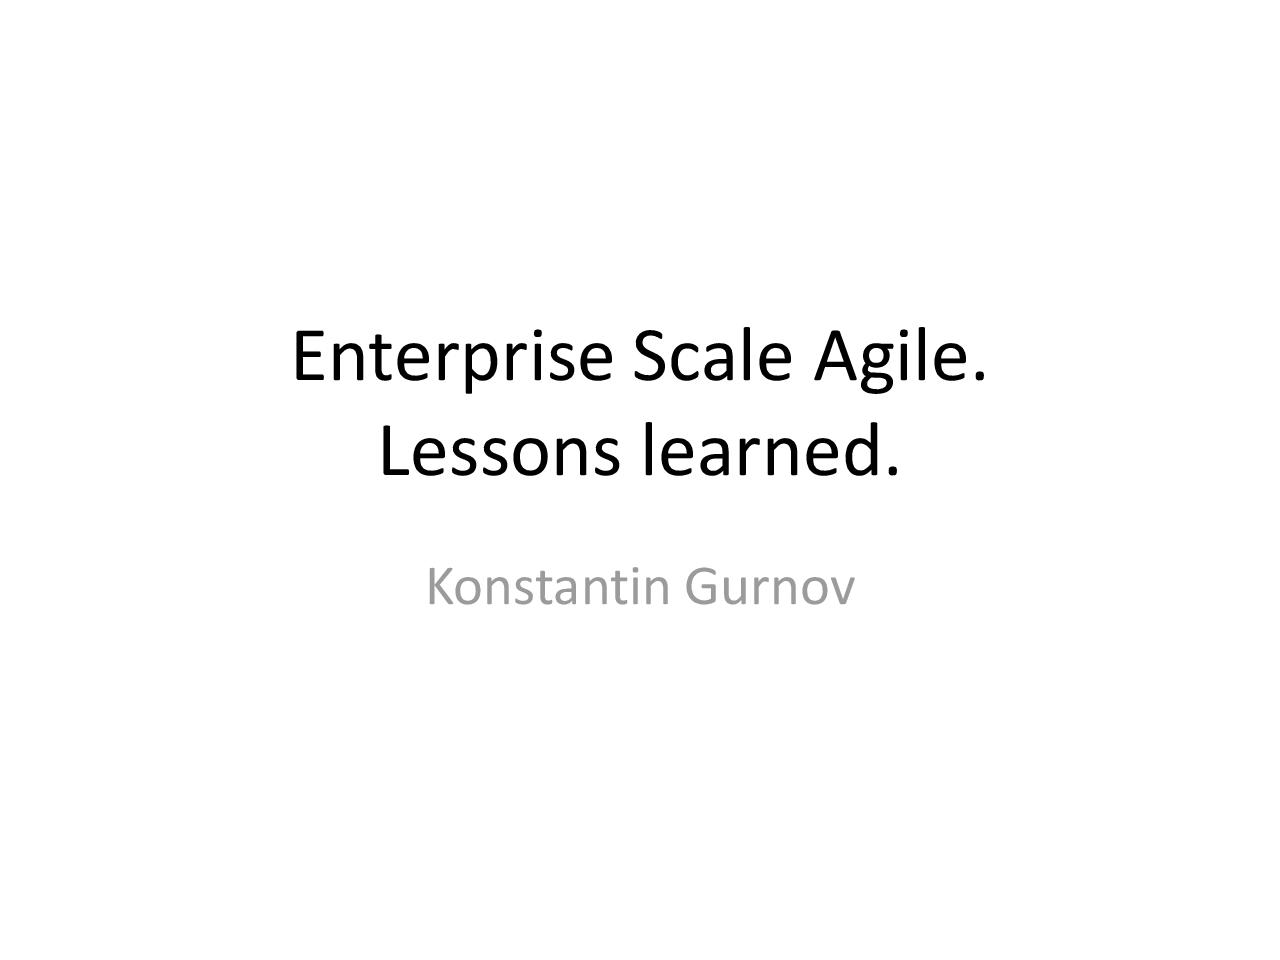 Enterprise Scale Agile. Lessons learned (Константин Гурнов, AgileDays-2011).pdf